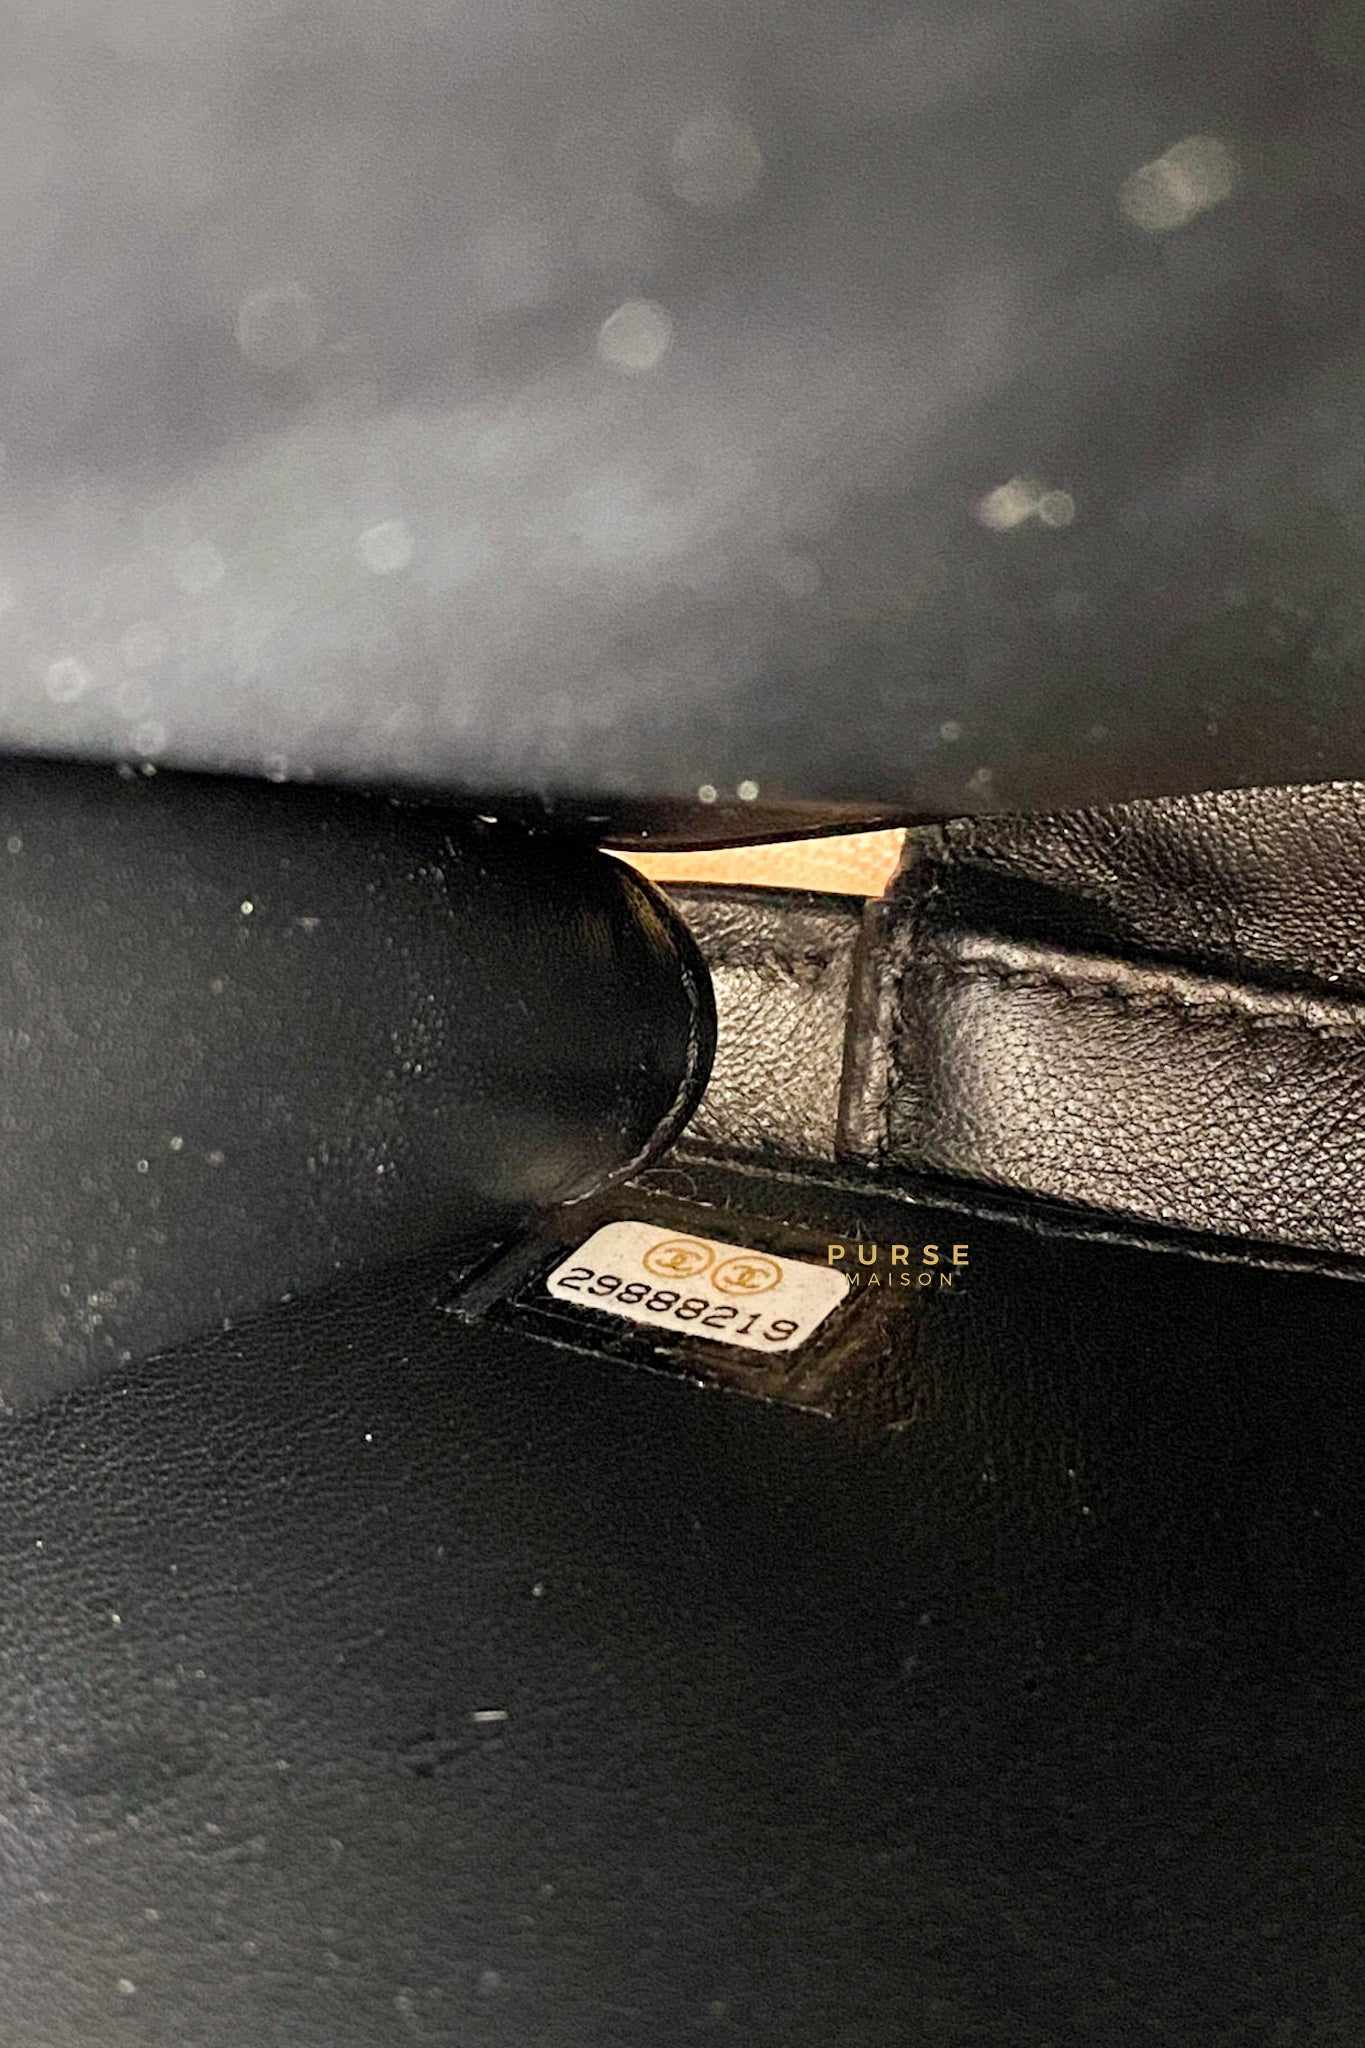 Chanel CC Filigree Medium Vanity Bag Beige/Black Caviar Leather in Light Gold Hardware Series 29